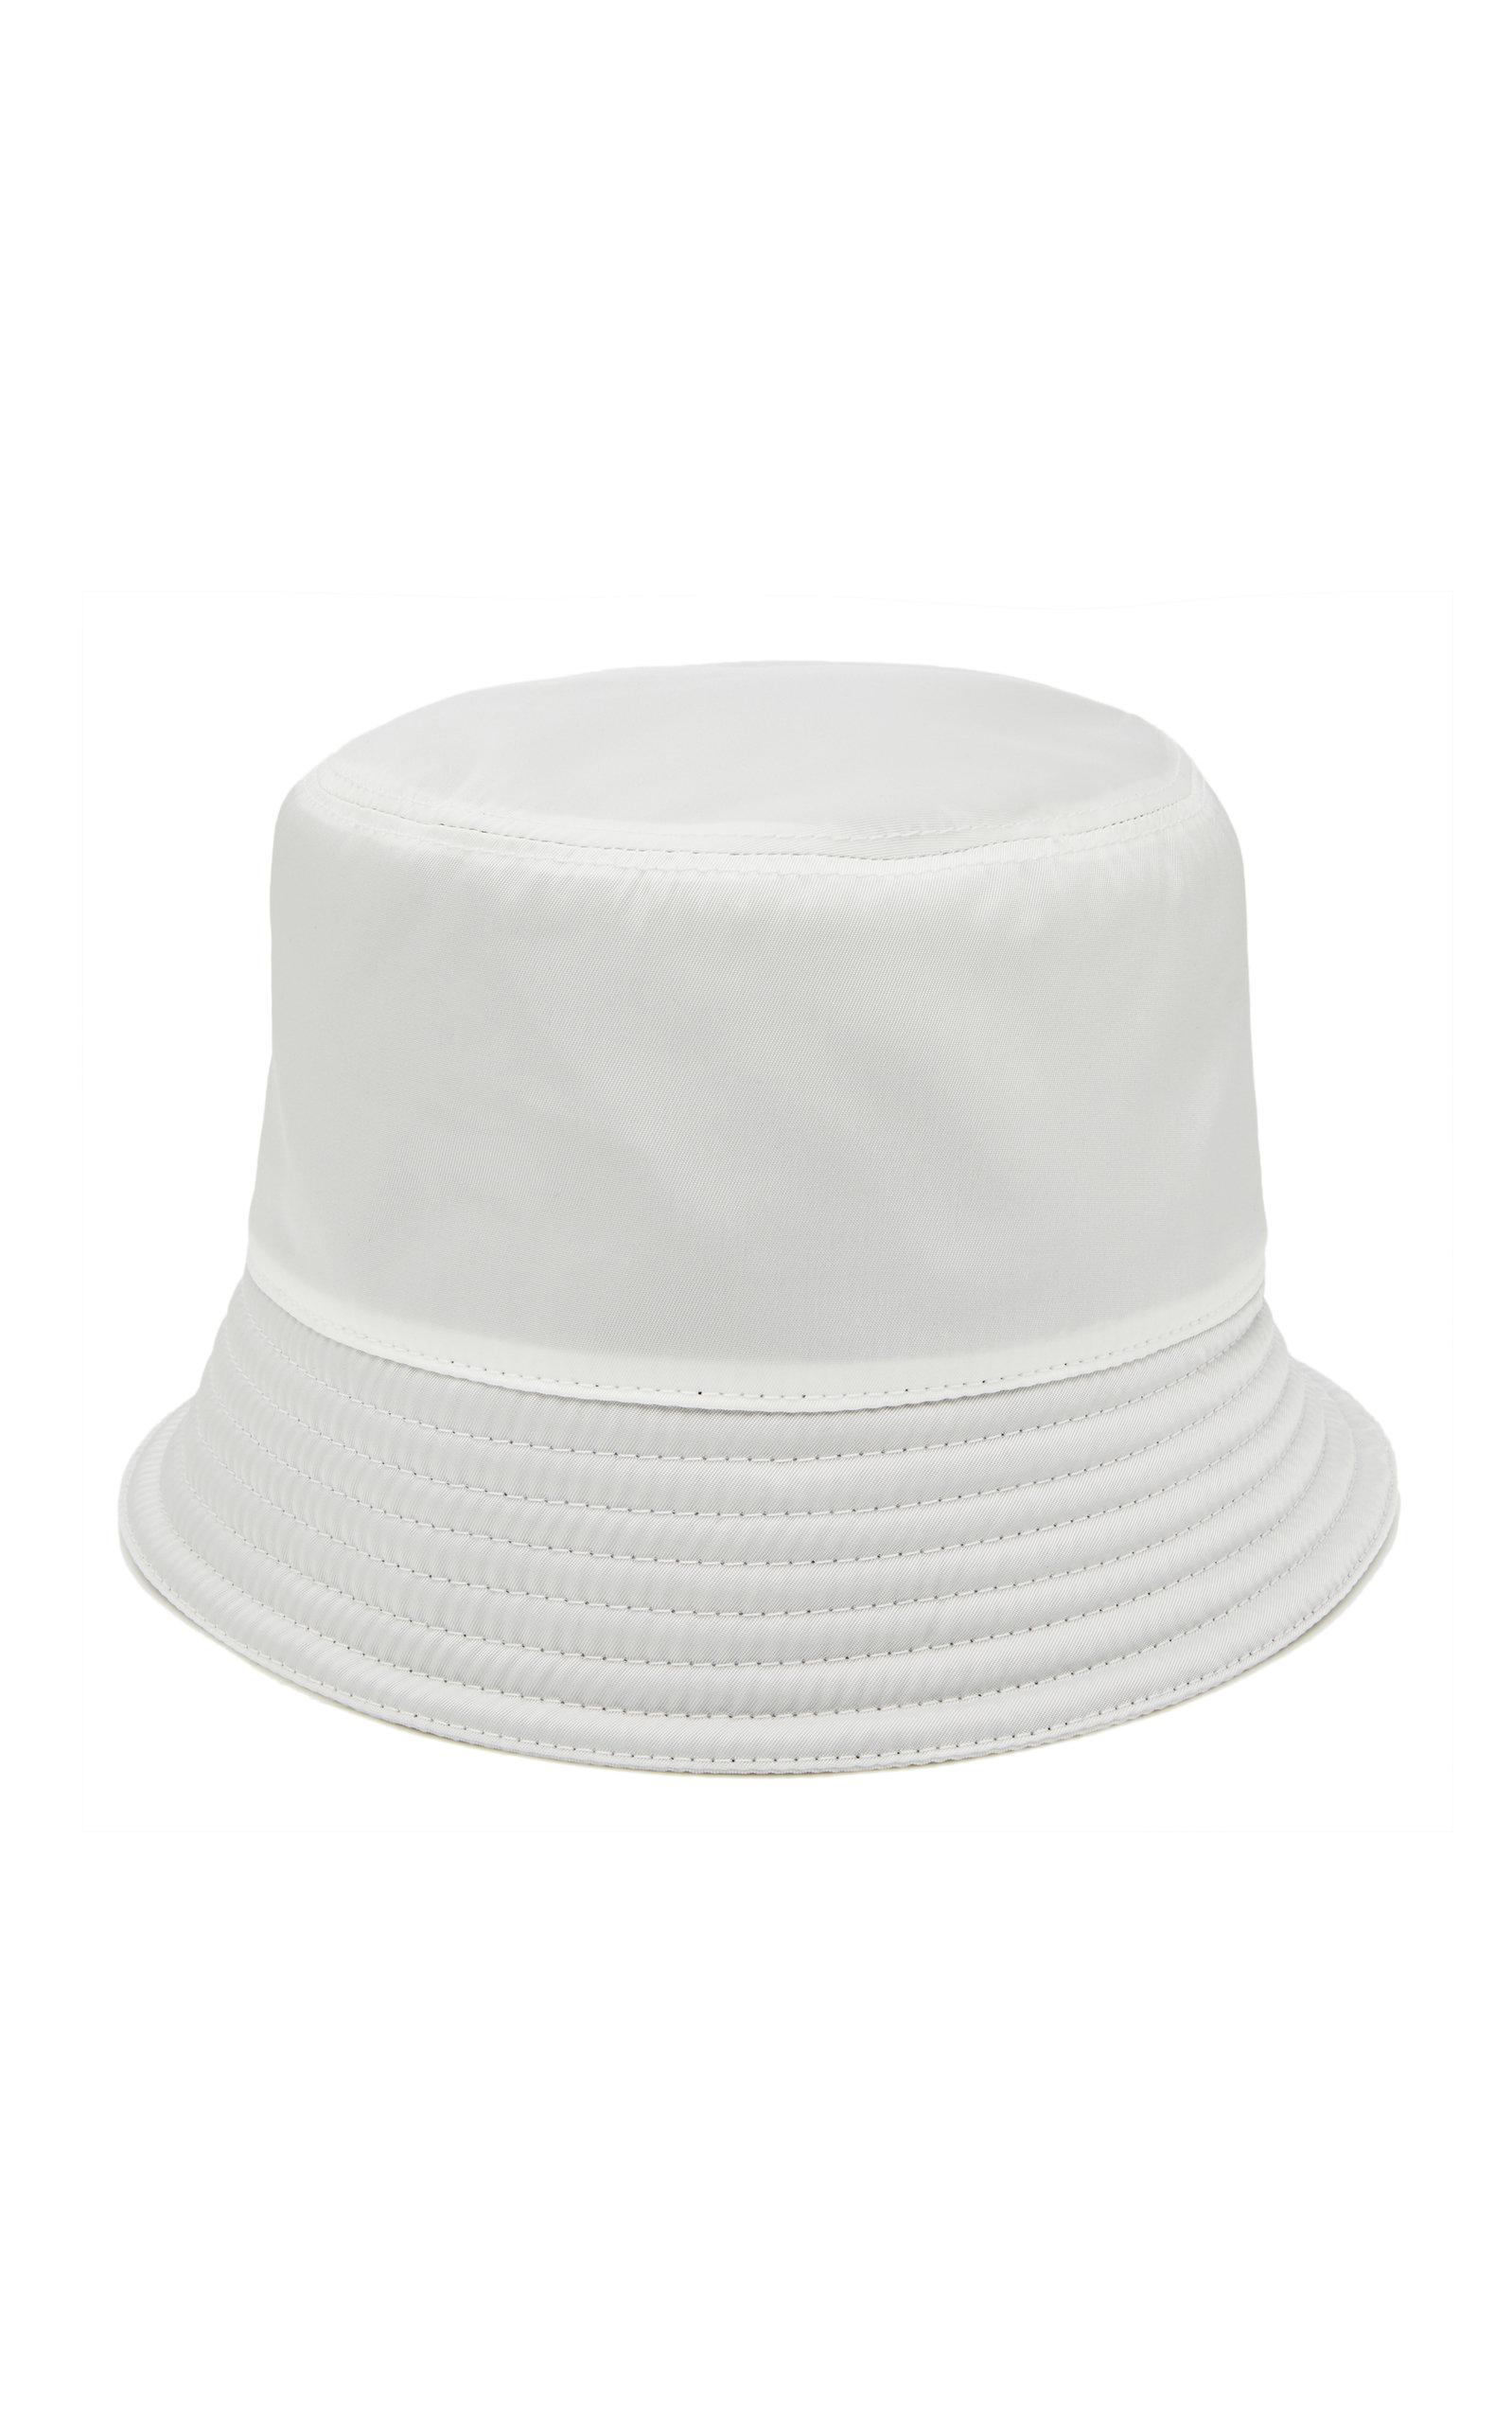 Prada Synthetic Logo-appliquéd Nylon Bucket Hat in White for Men - Lyst